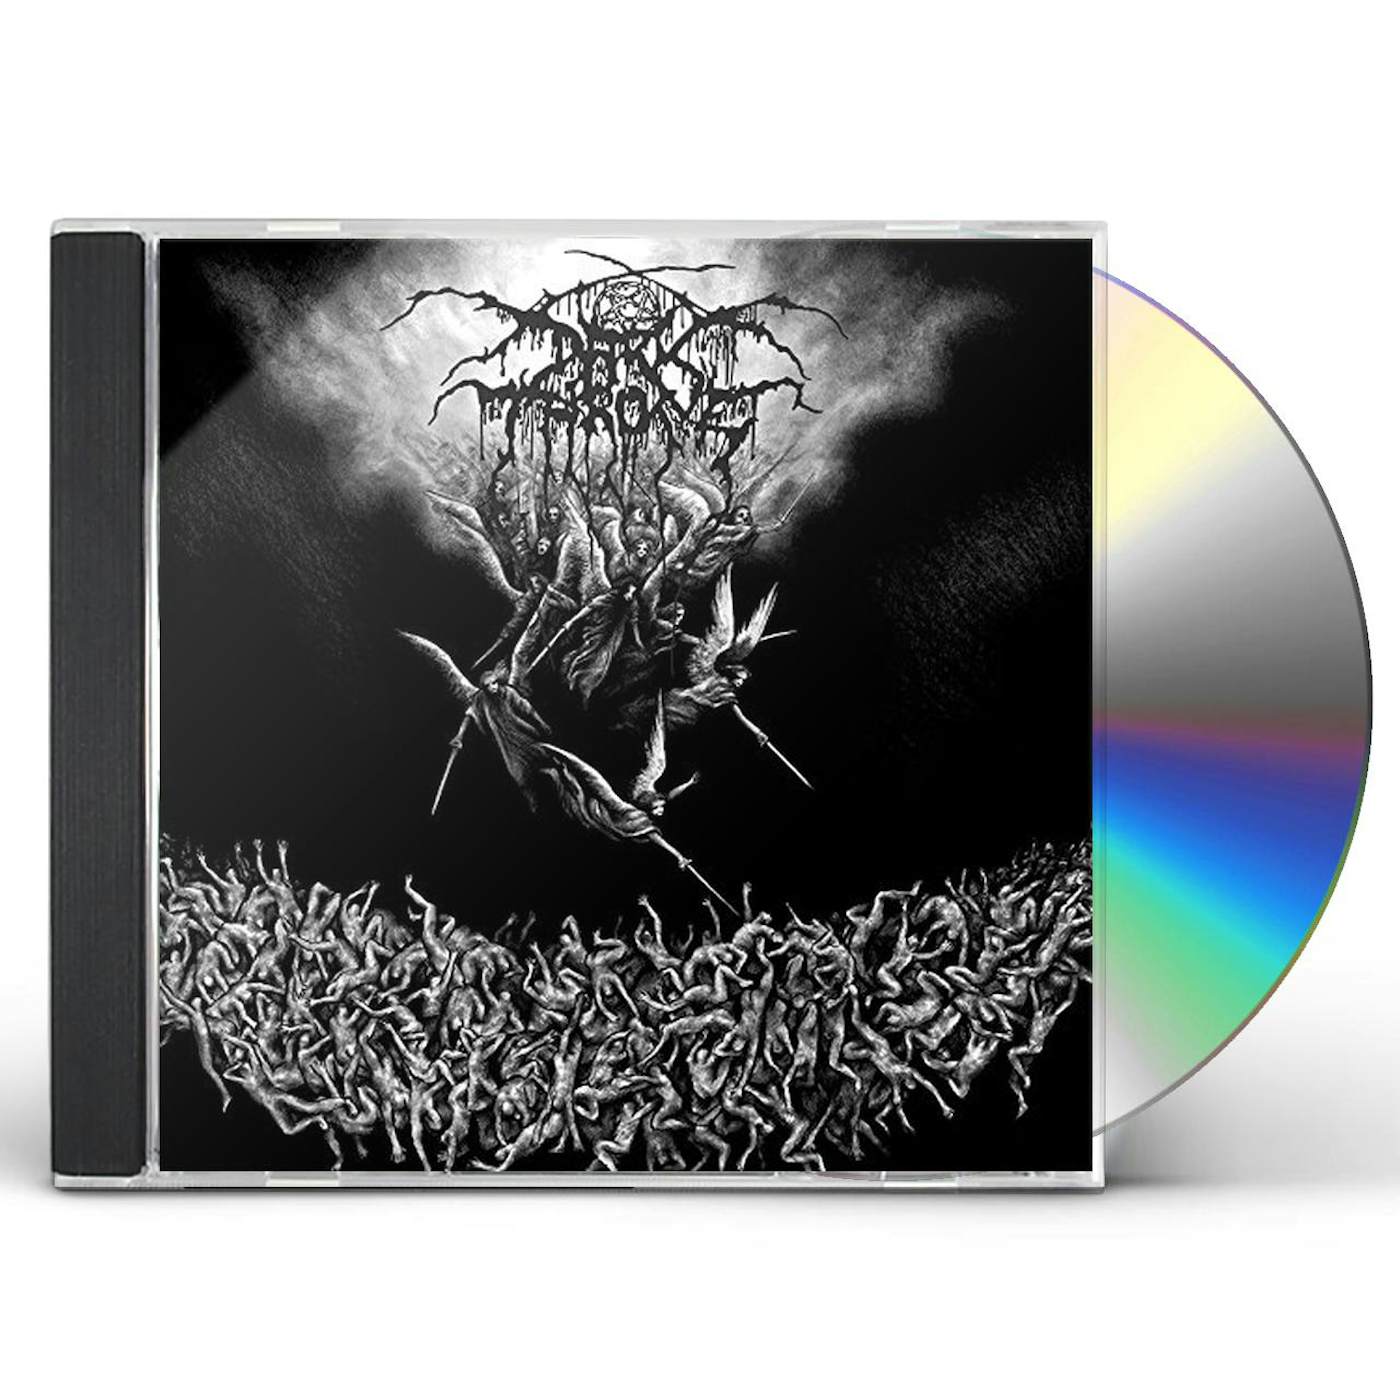 Darkthrone SARDONIC WRATH CD